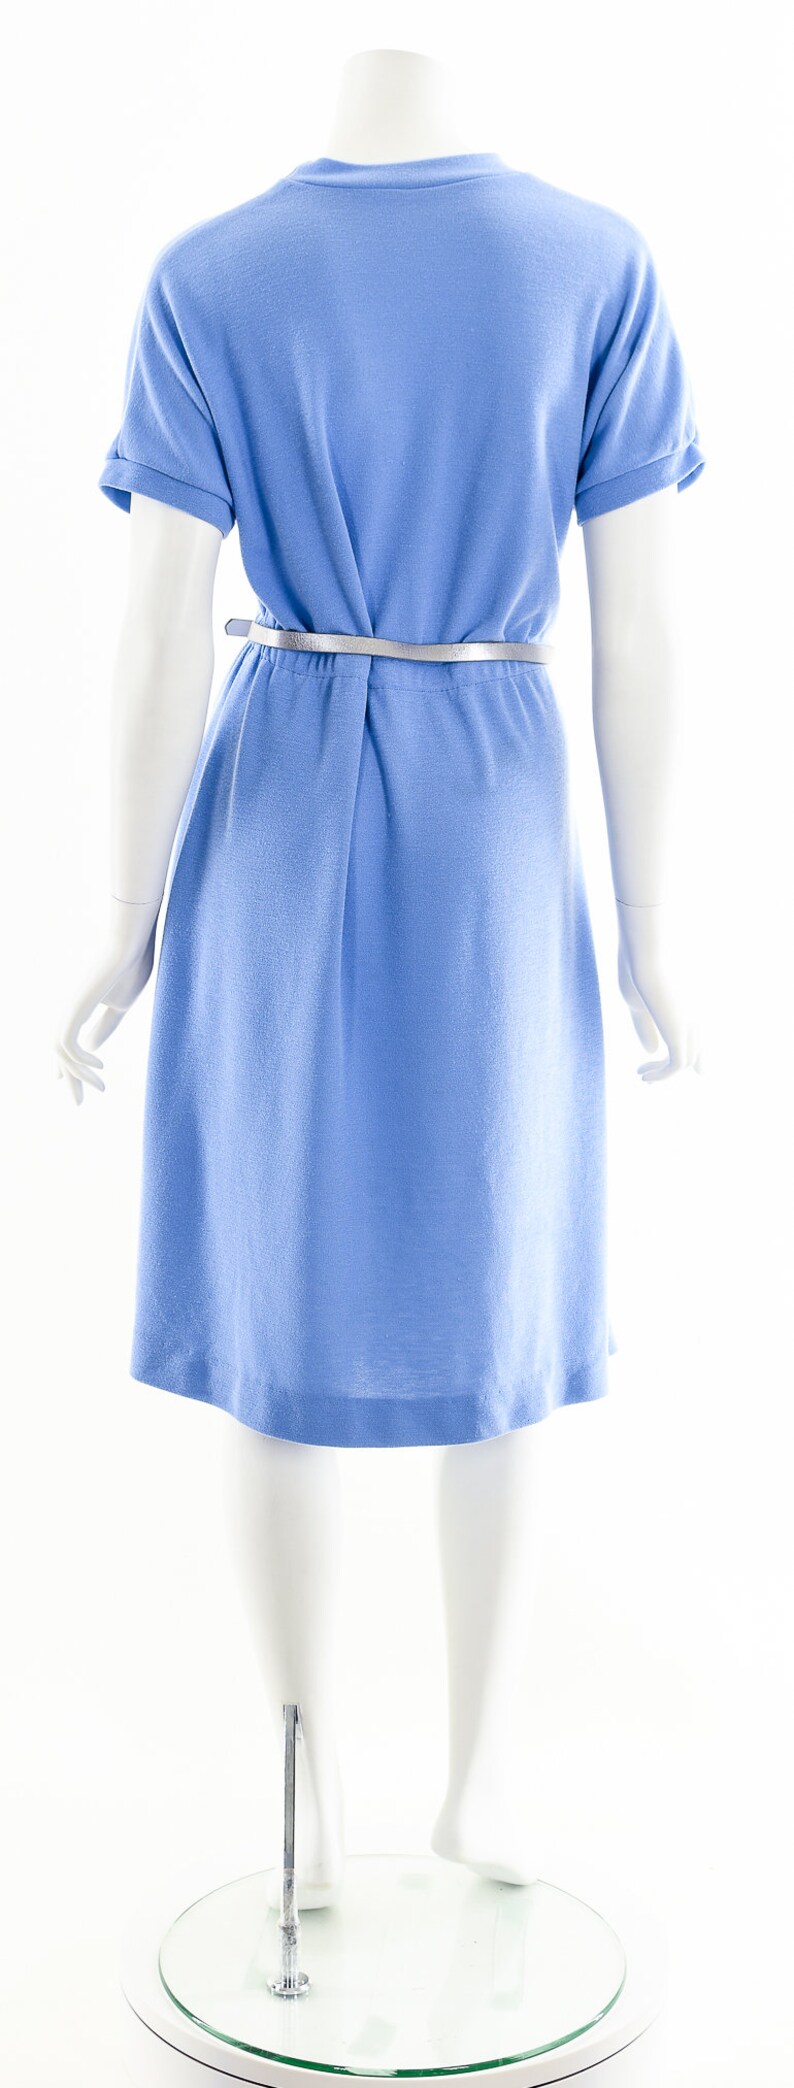 blue knit tshirt dress,80s knit fit and flare dress,mock neck dress, image 7